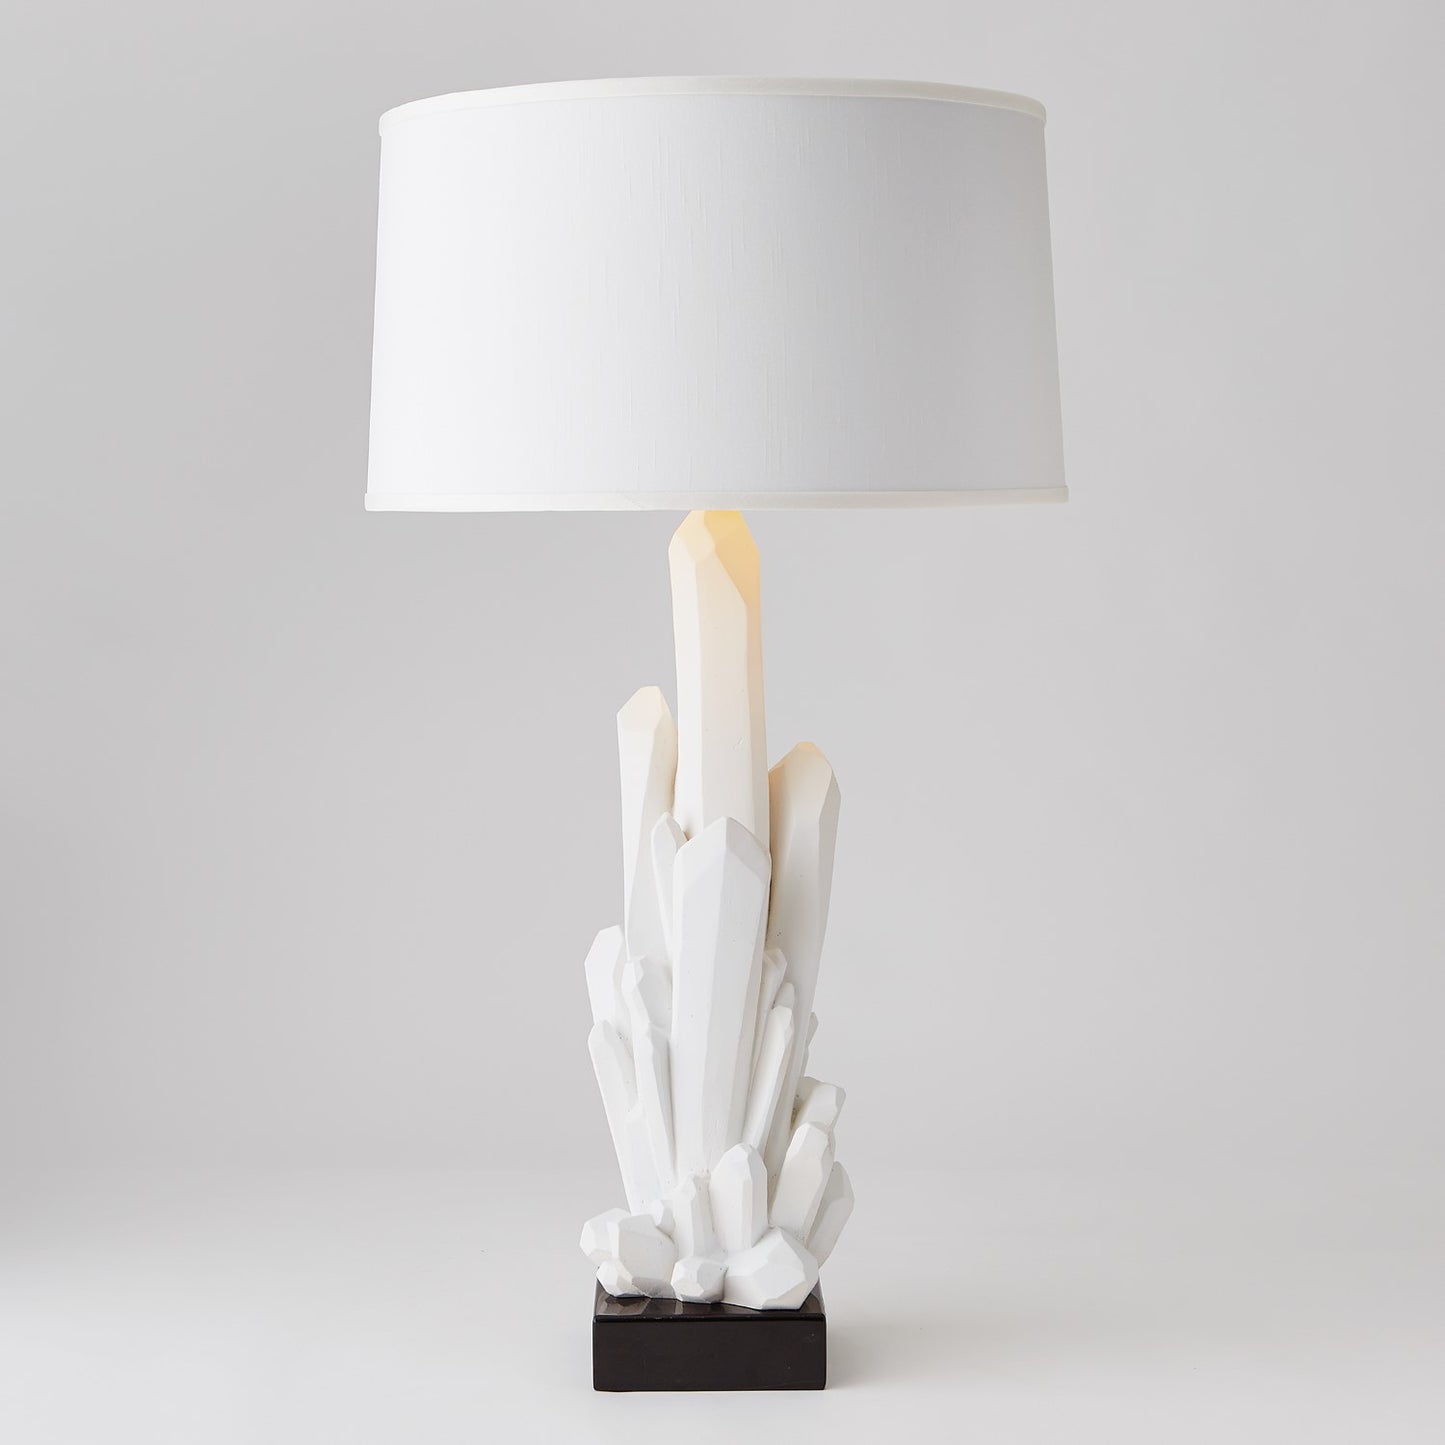 Facet Cluster Table Lamp - White w/White Shade - Grats Decor Interior Design & Build Inc.